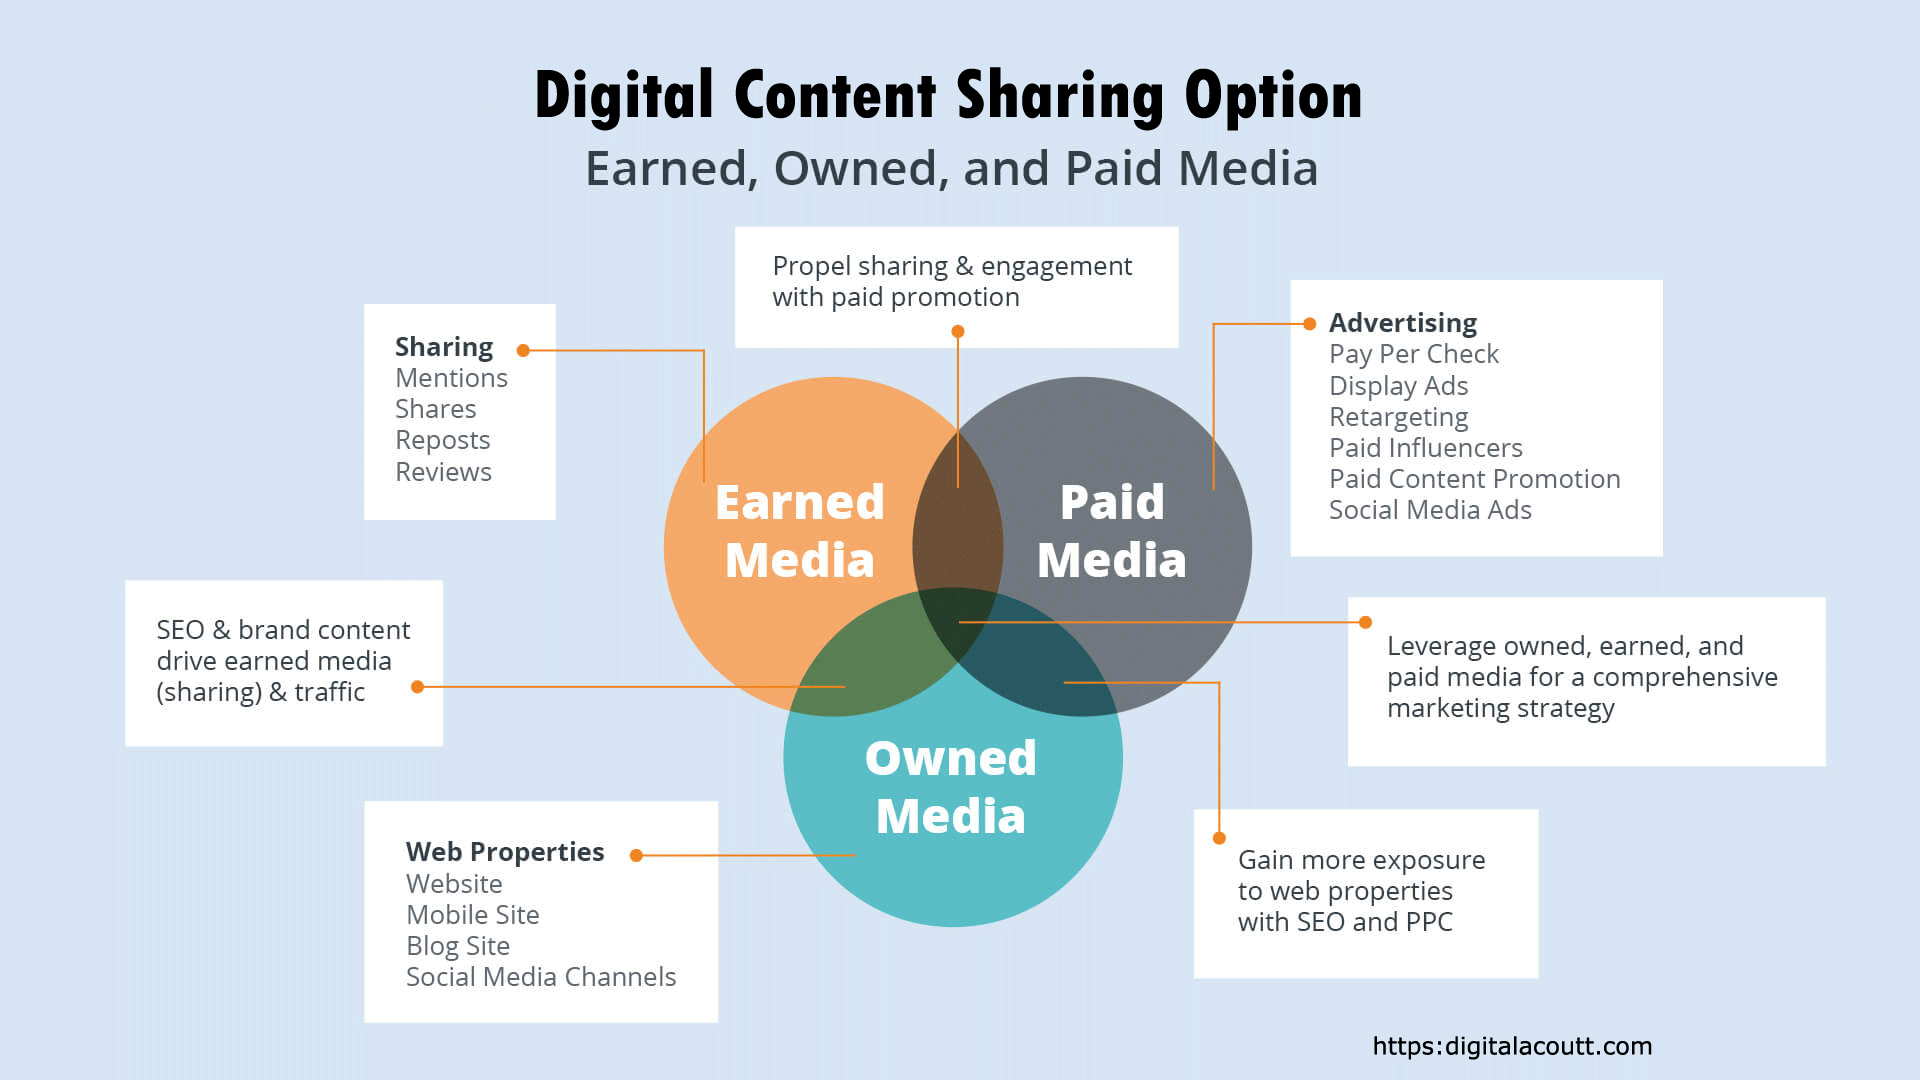 Digital Content sharing options